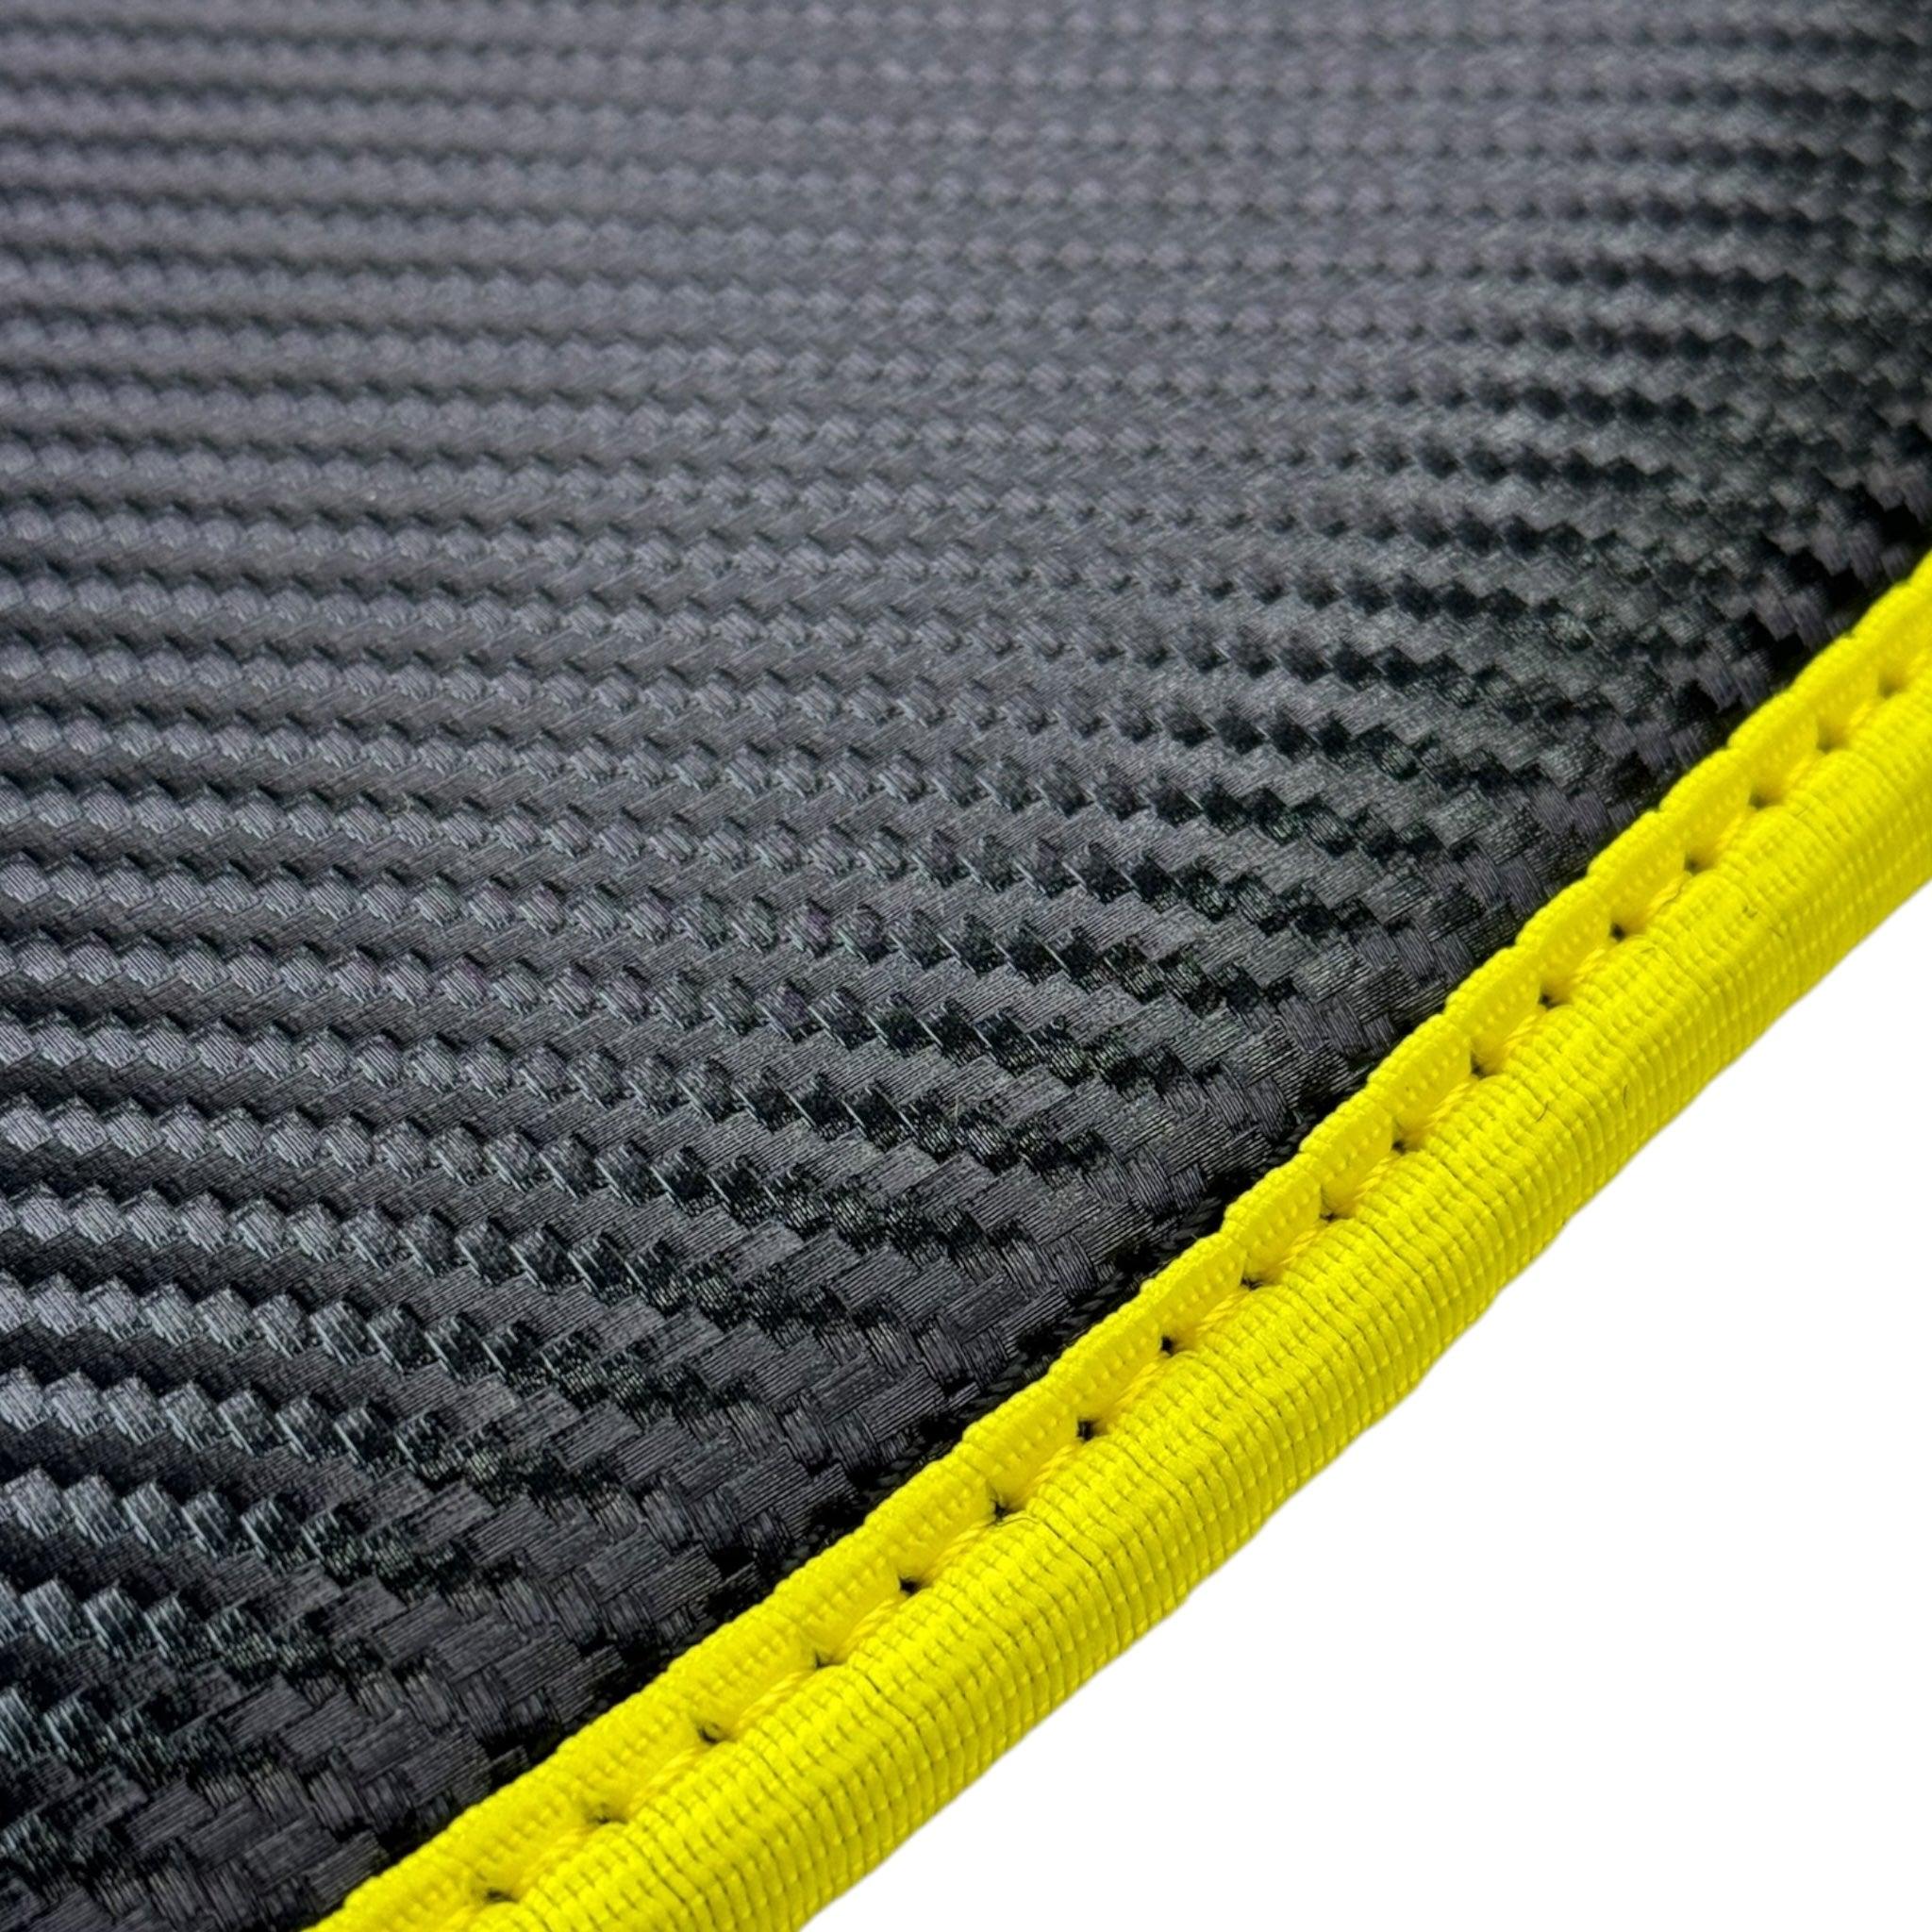 Carbon Fiber Floor Mats for Ferrari 812 Superfast | Yellow Trim